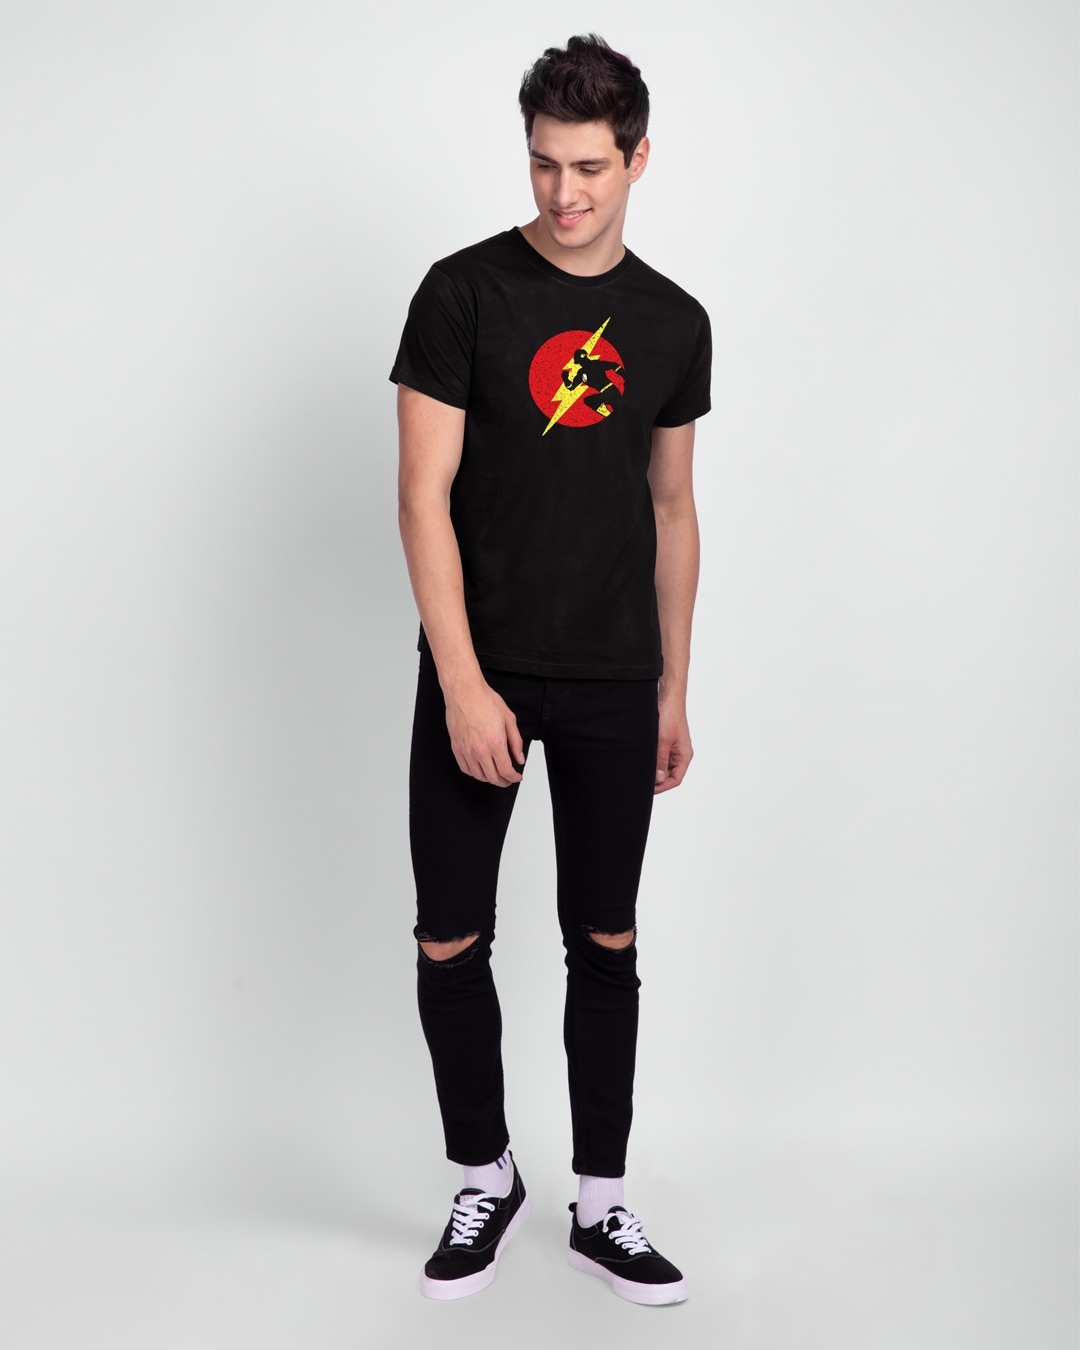 Shop Men's Black Runner Flash (FL) Graphic Printed T-shirt-Design